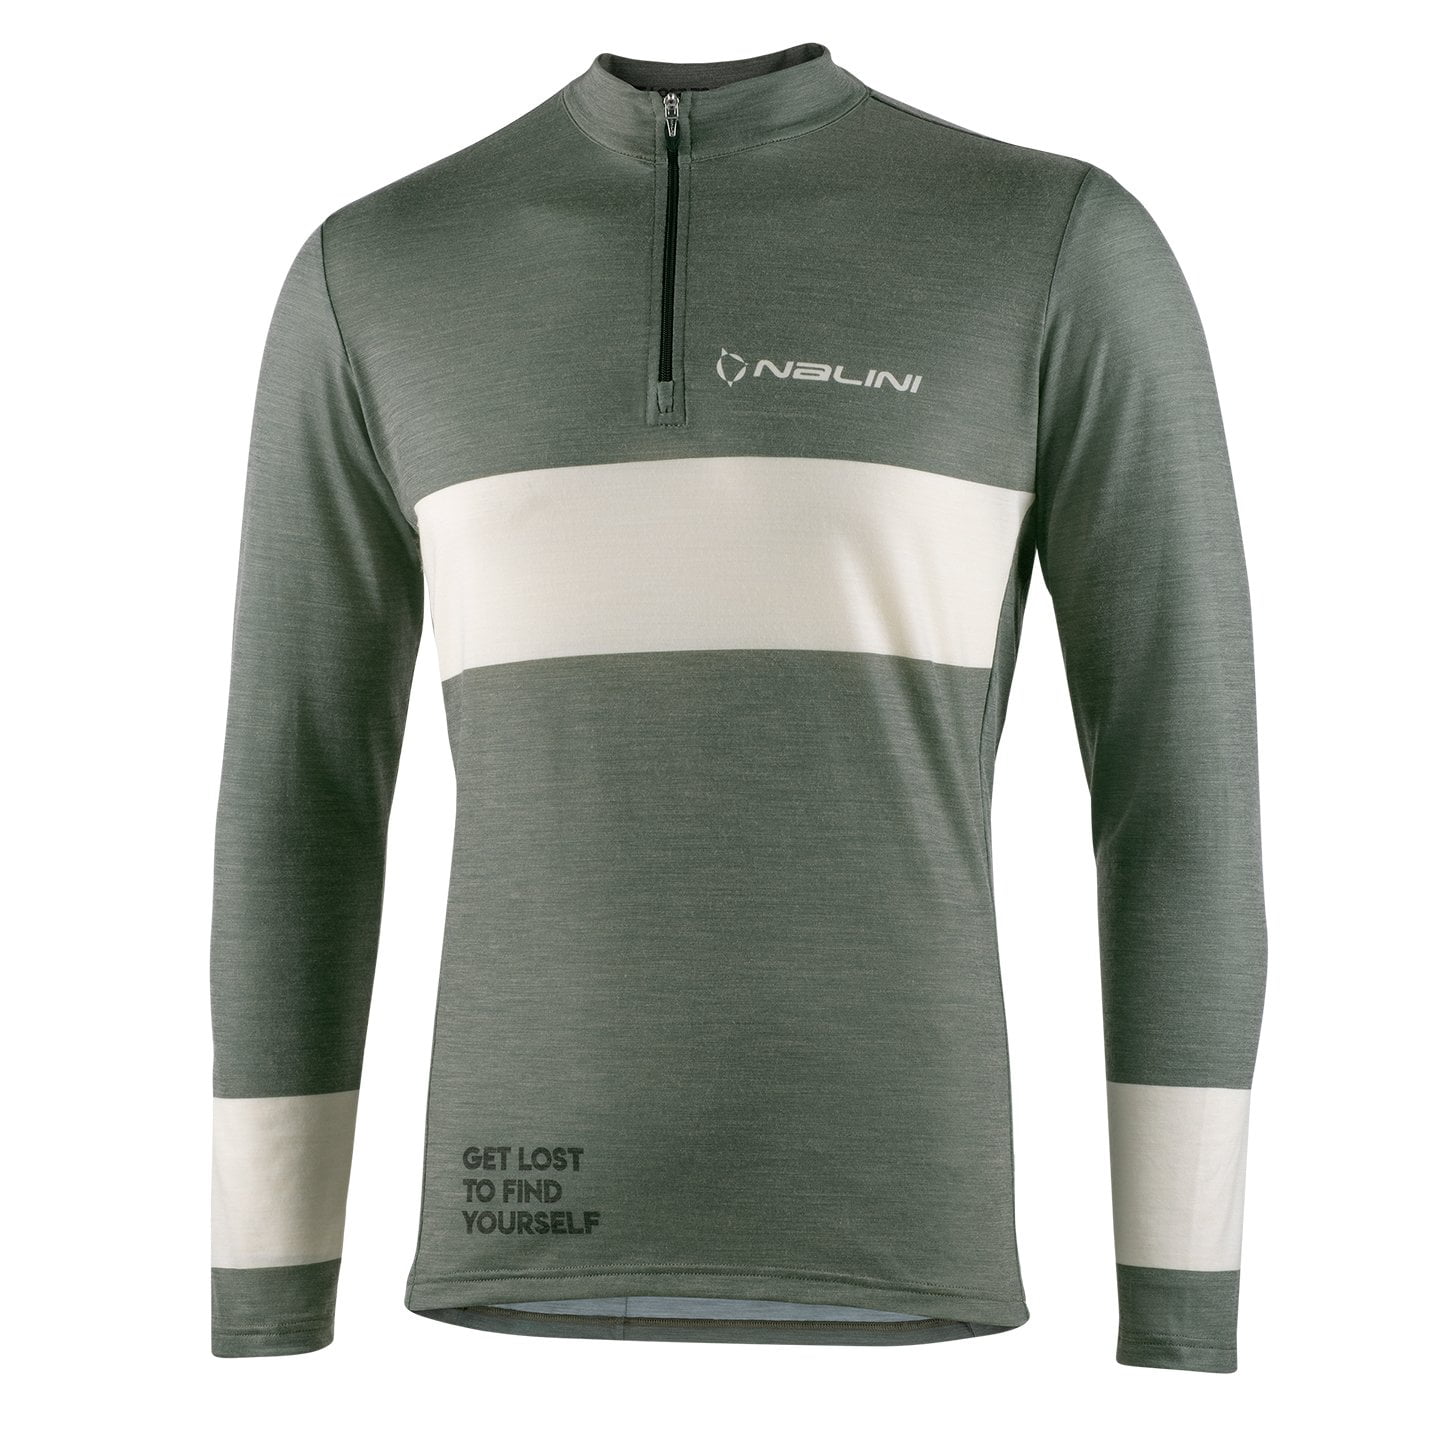 NALINI New Wool Long Sleeve Jersey Bikeshirt, for men, size L, Cycling jersey, Cycling clothing